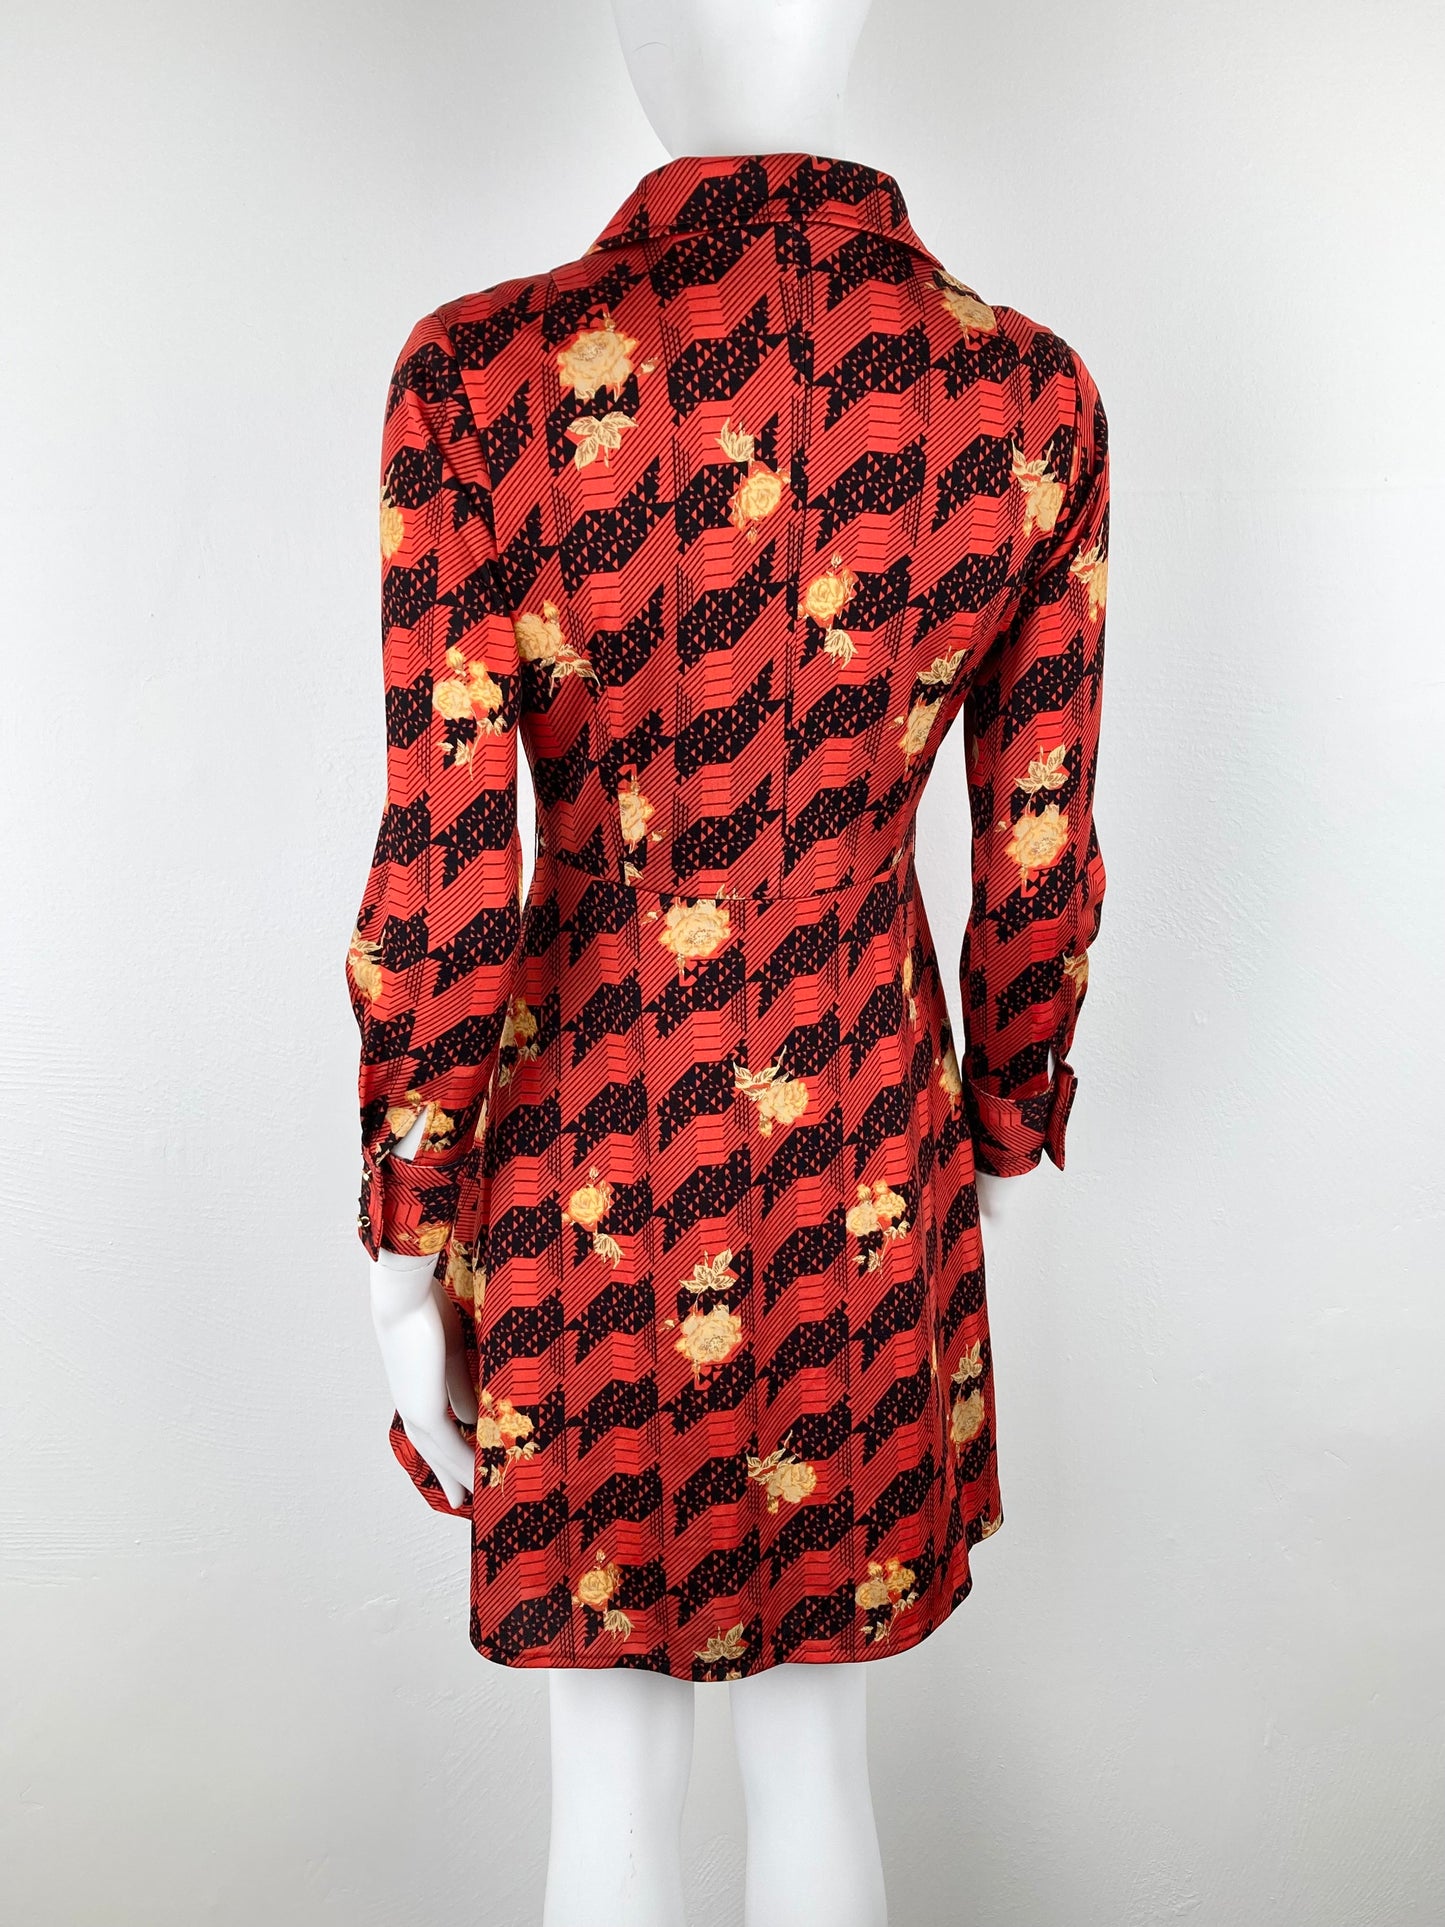 Mod 70s Burnt Orange And Black Knit Mini Dress, Mod shirtwaist 70s Dress, Size S